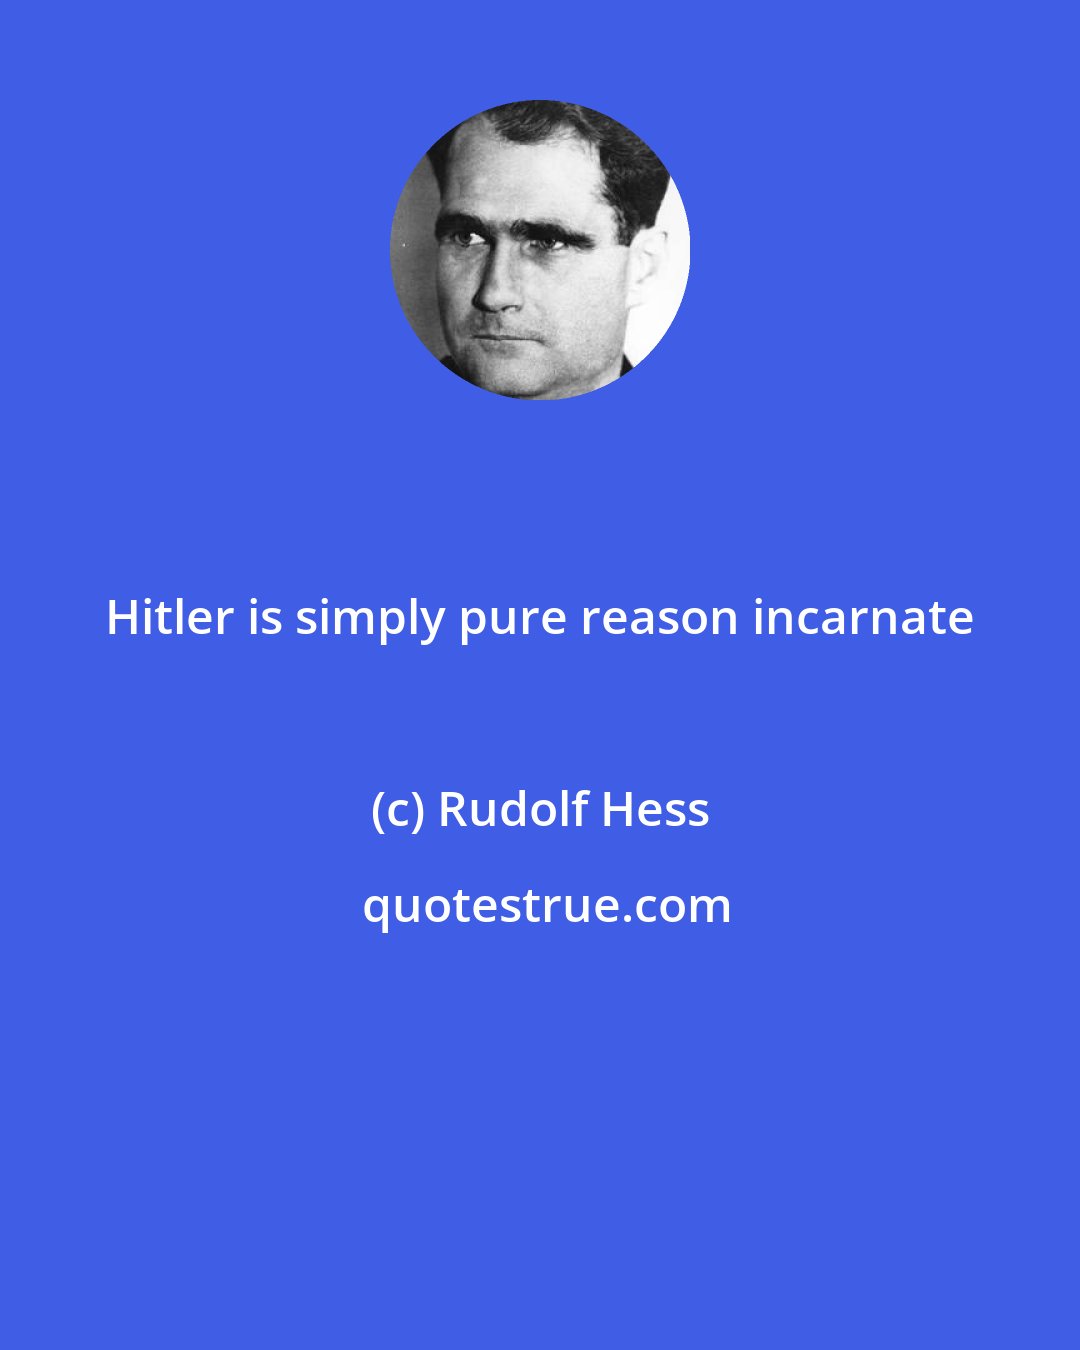 Rudolf Hess: Hitler is simply pure reason incarnate